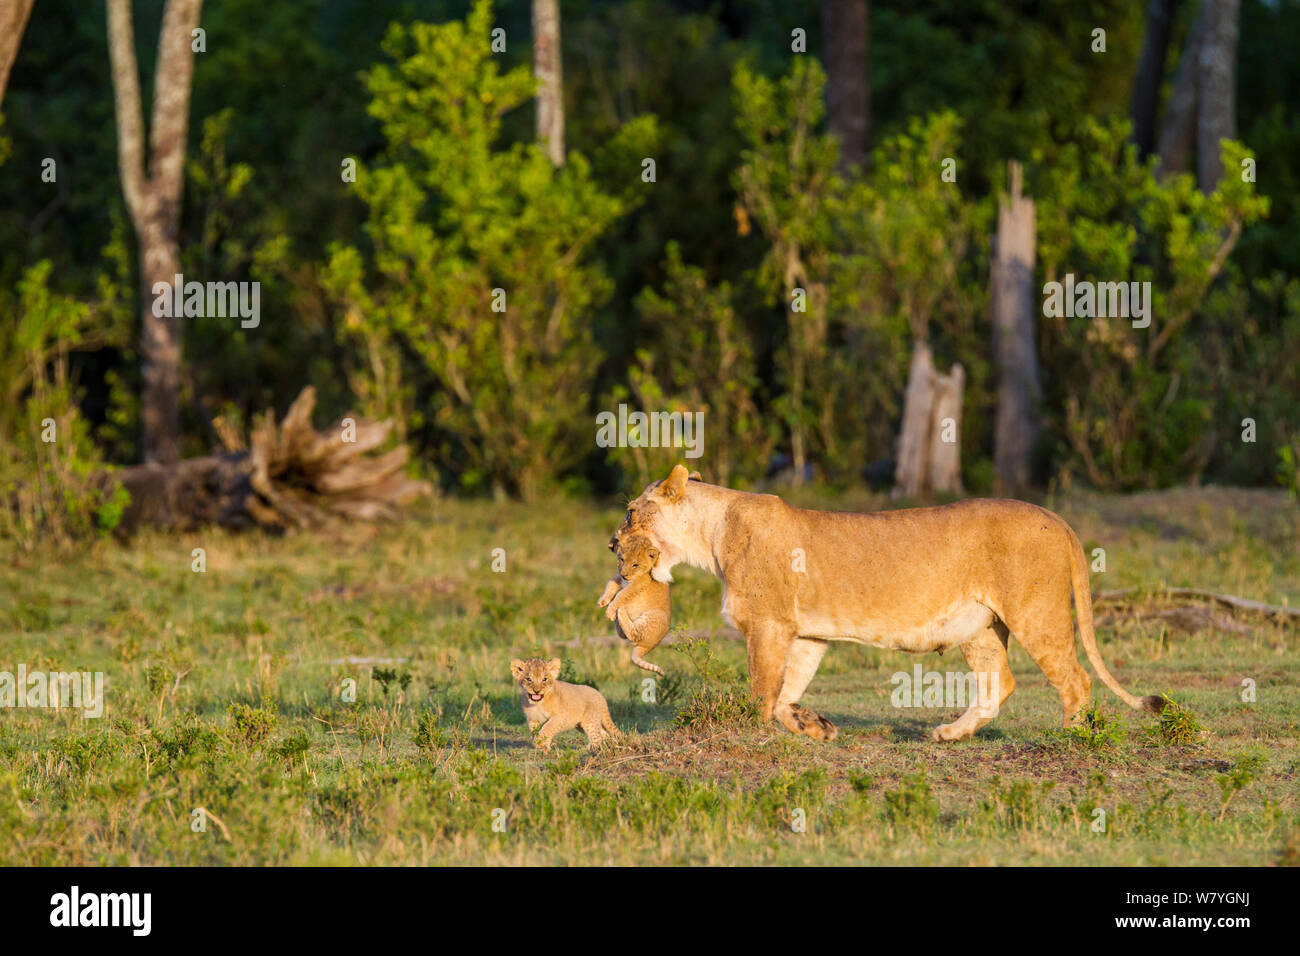 Lioness (Panthera leo) cub, réserve Masai Mara, Kenya, septembre. Banque D'Images